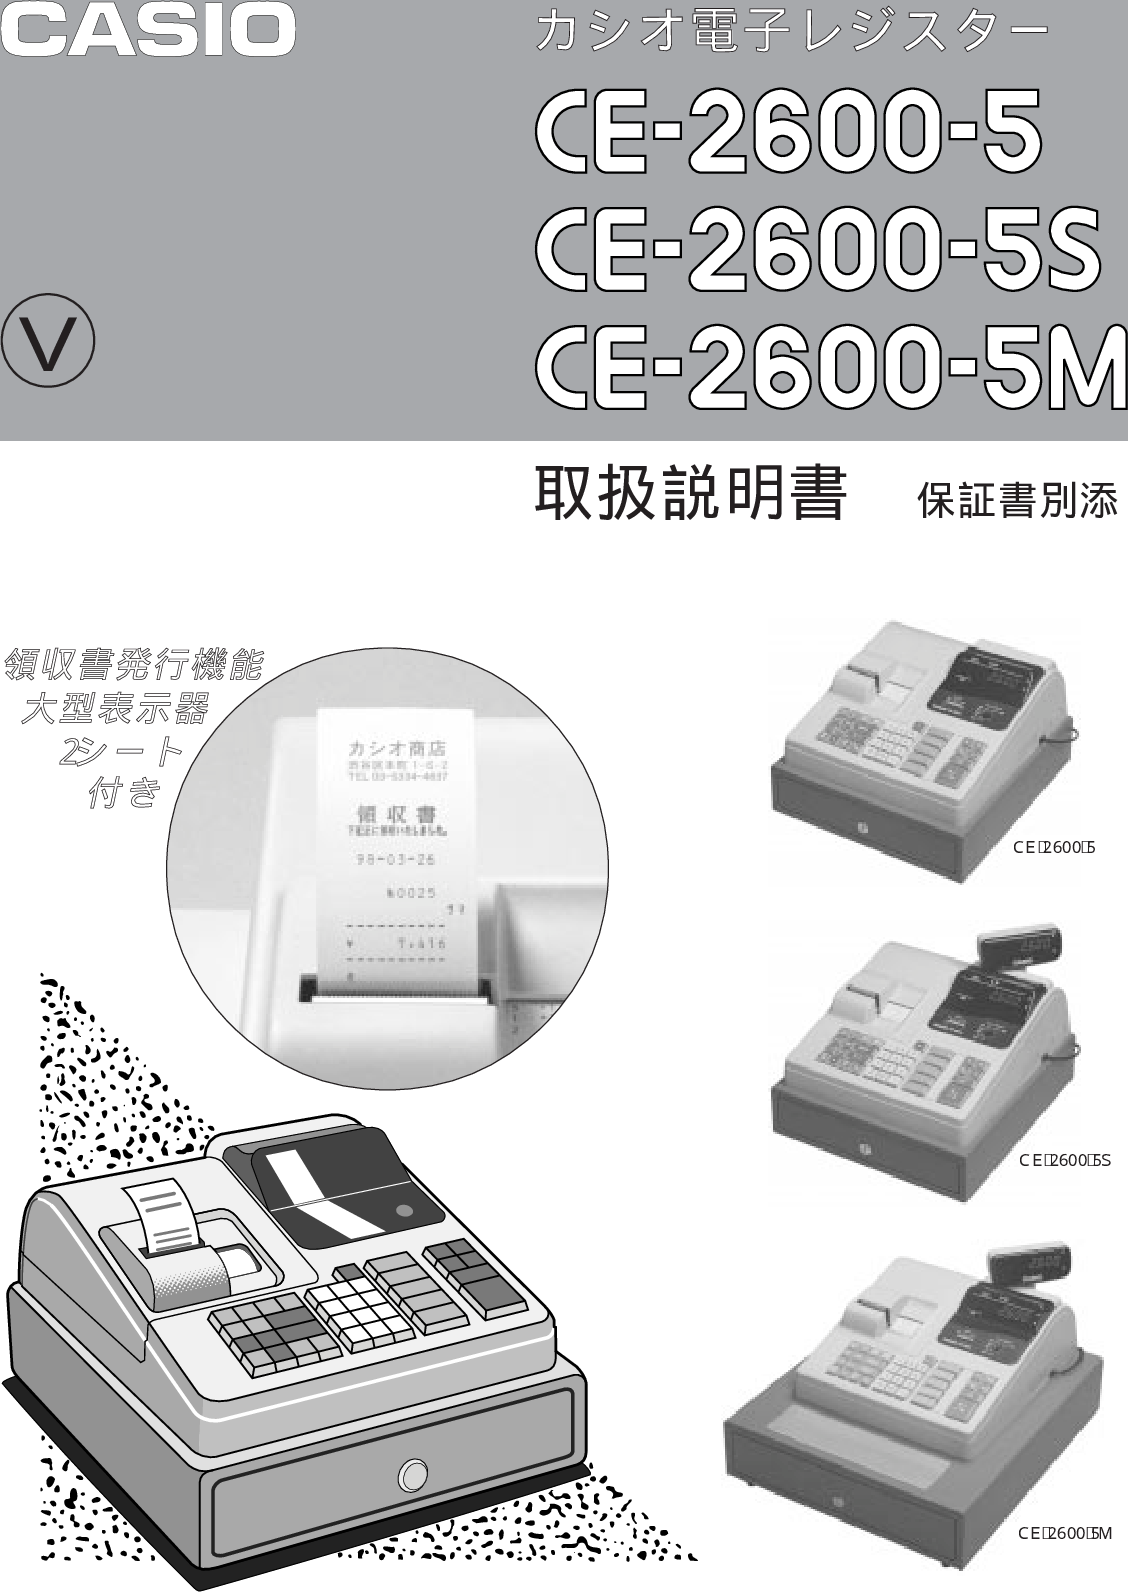 Casio User's Manual CE 2600 5S CE2600V5